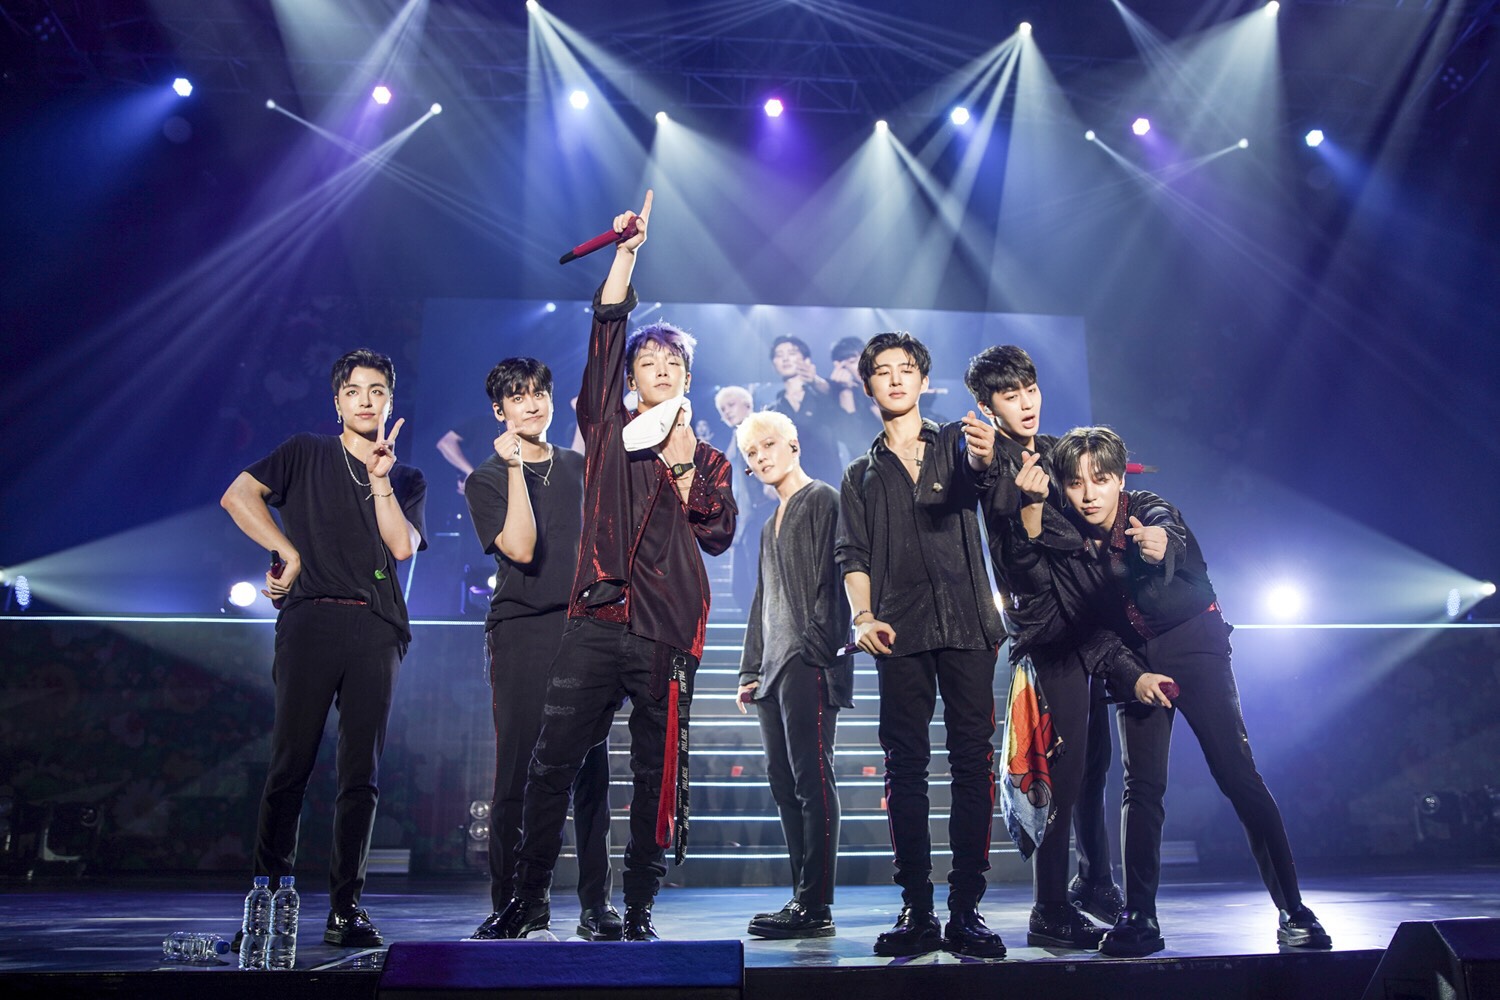 BIGBANGの系譜を継ぐ7人組ボーイズグループiKON(アイコン)、 【iKON JAPAN TOUR 2018】が福岡にて開幕!3日間で3万2,000人が熱狂!